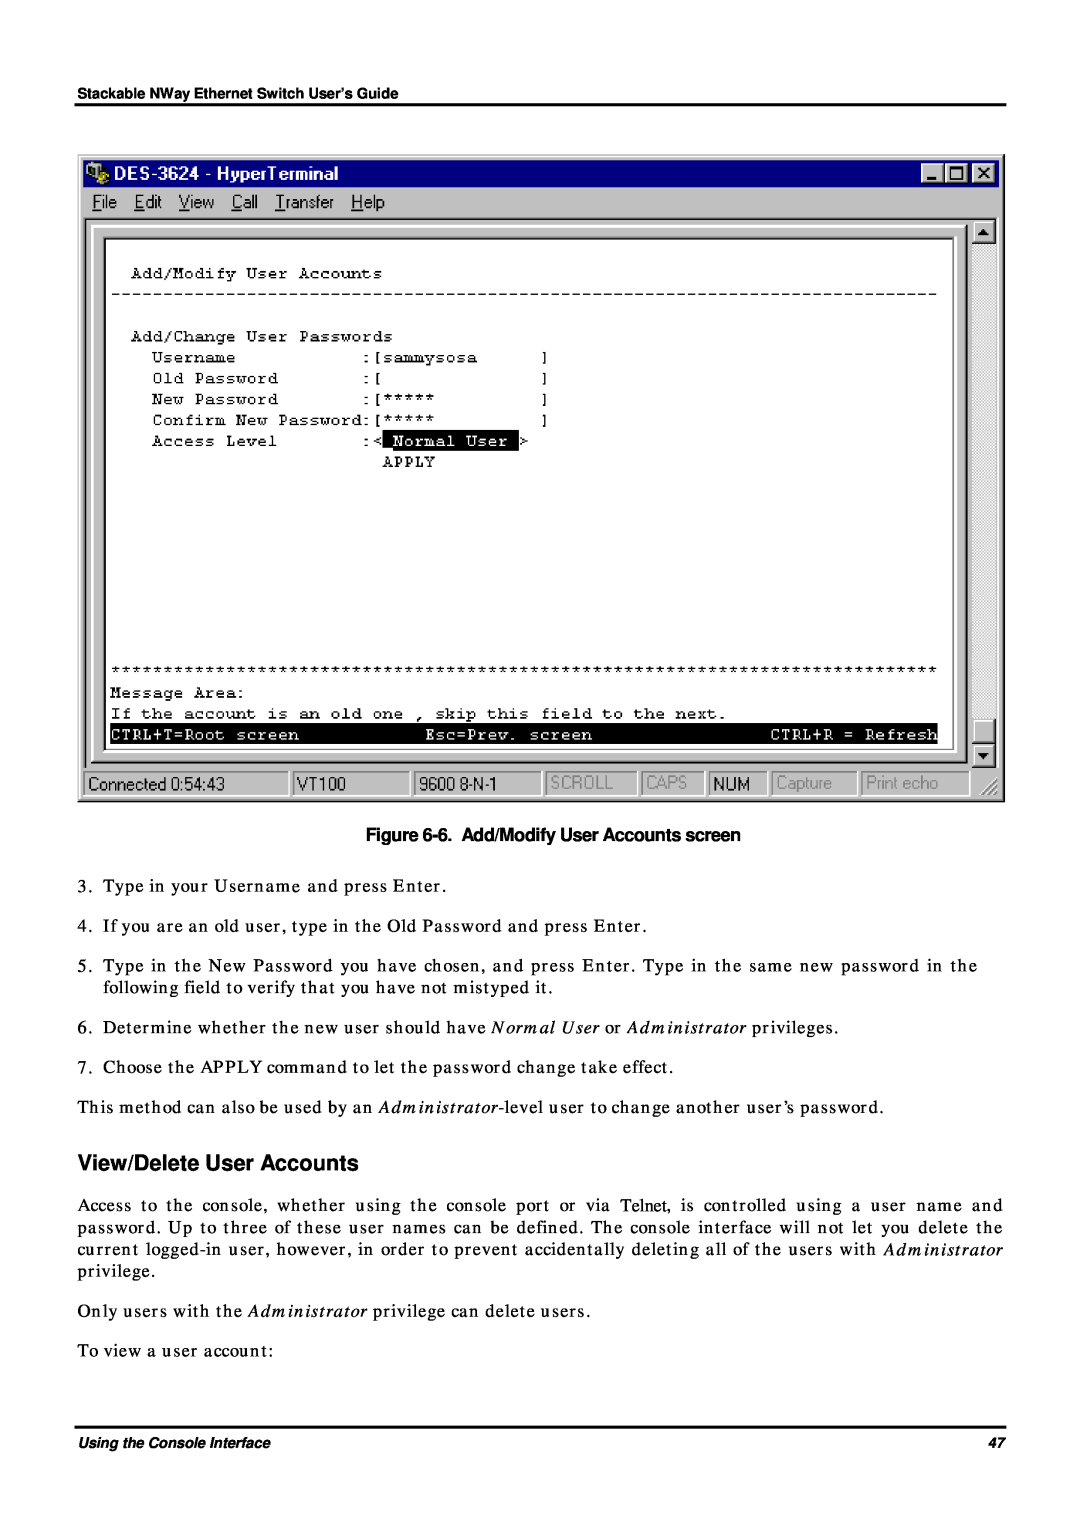 D-Link DES-3624 manual View/Delete User Accounts, 6. Add/Modify User Accounts screen 